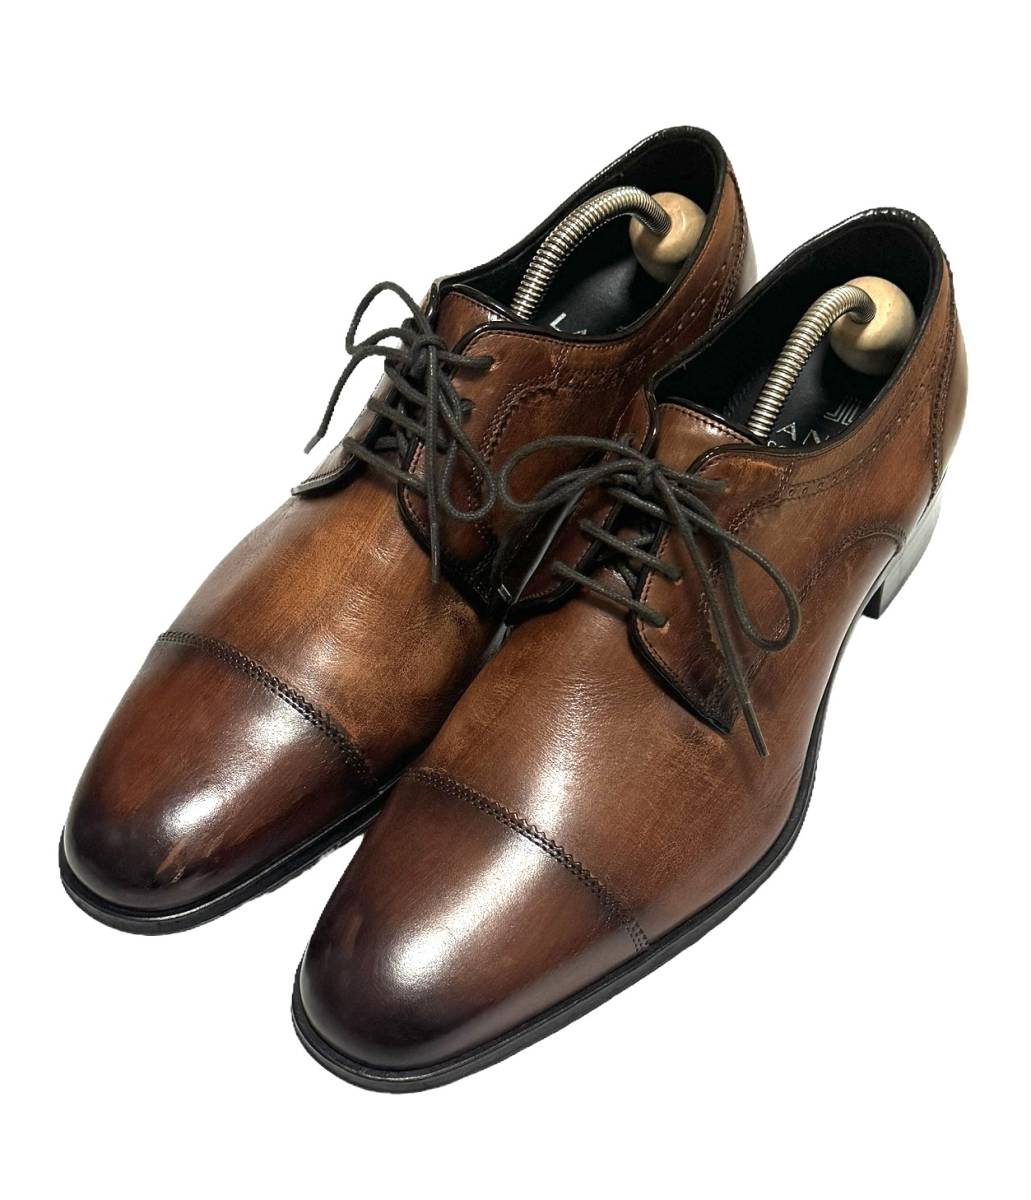  Lanvin коллекция 25cm 83376 Brown LANVIN COLLECTION натуральная кожа распорка chip кожа обувь платье обувь бизнес USED товар 